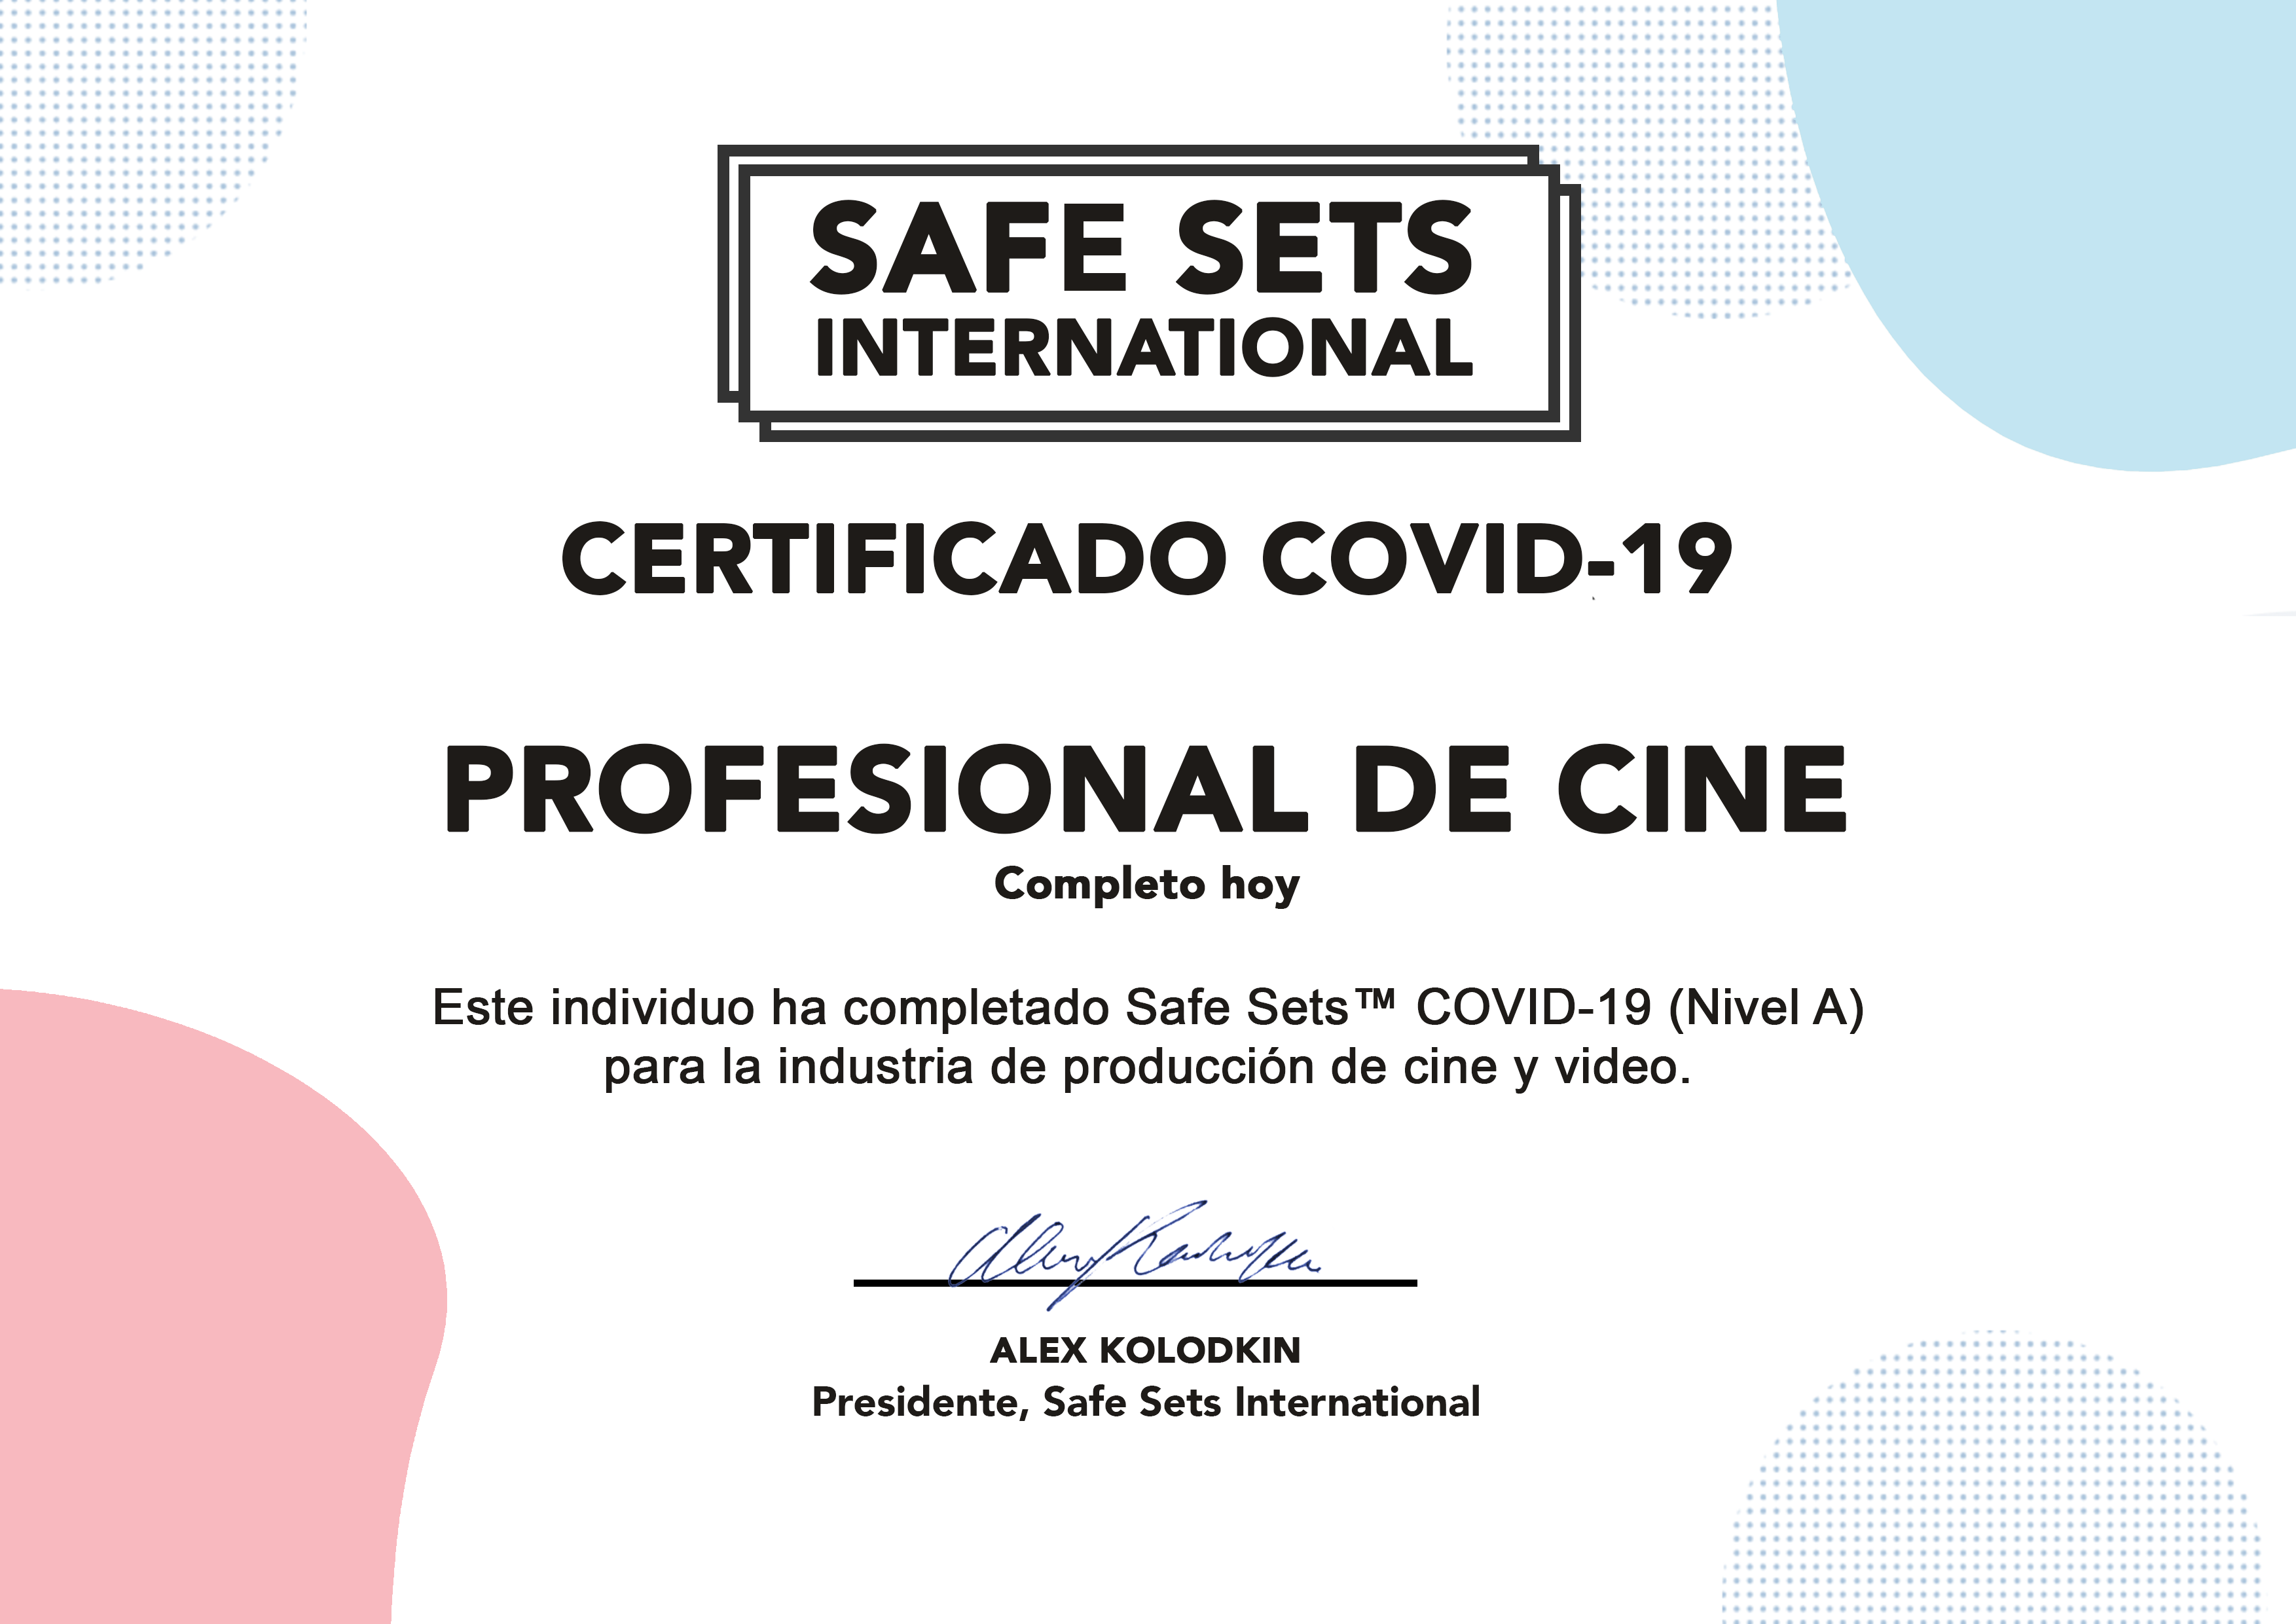 Sample Safe Sets COVID-19 Certificate